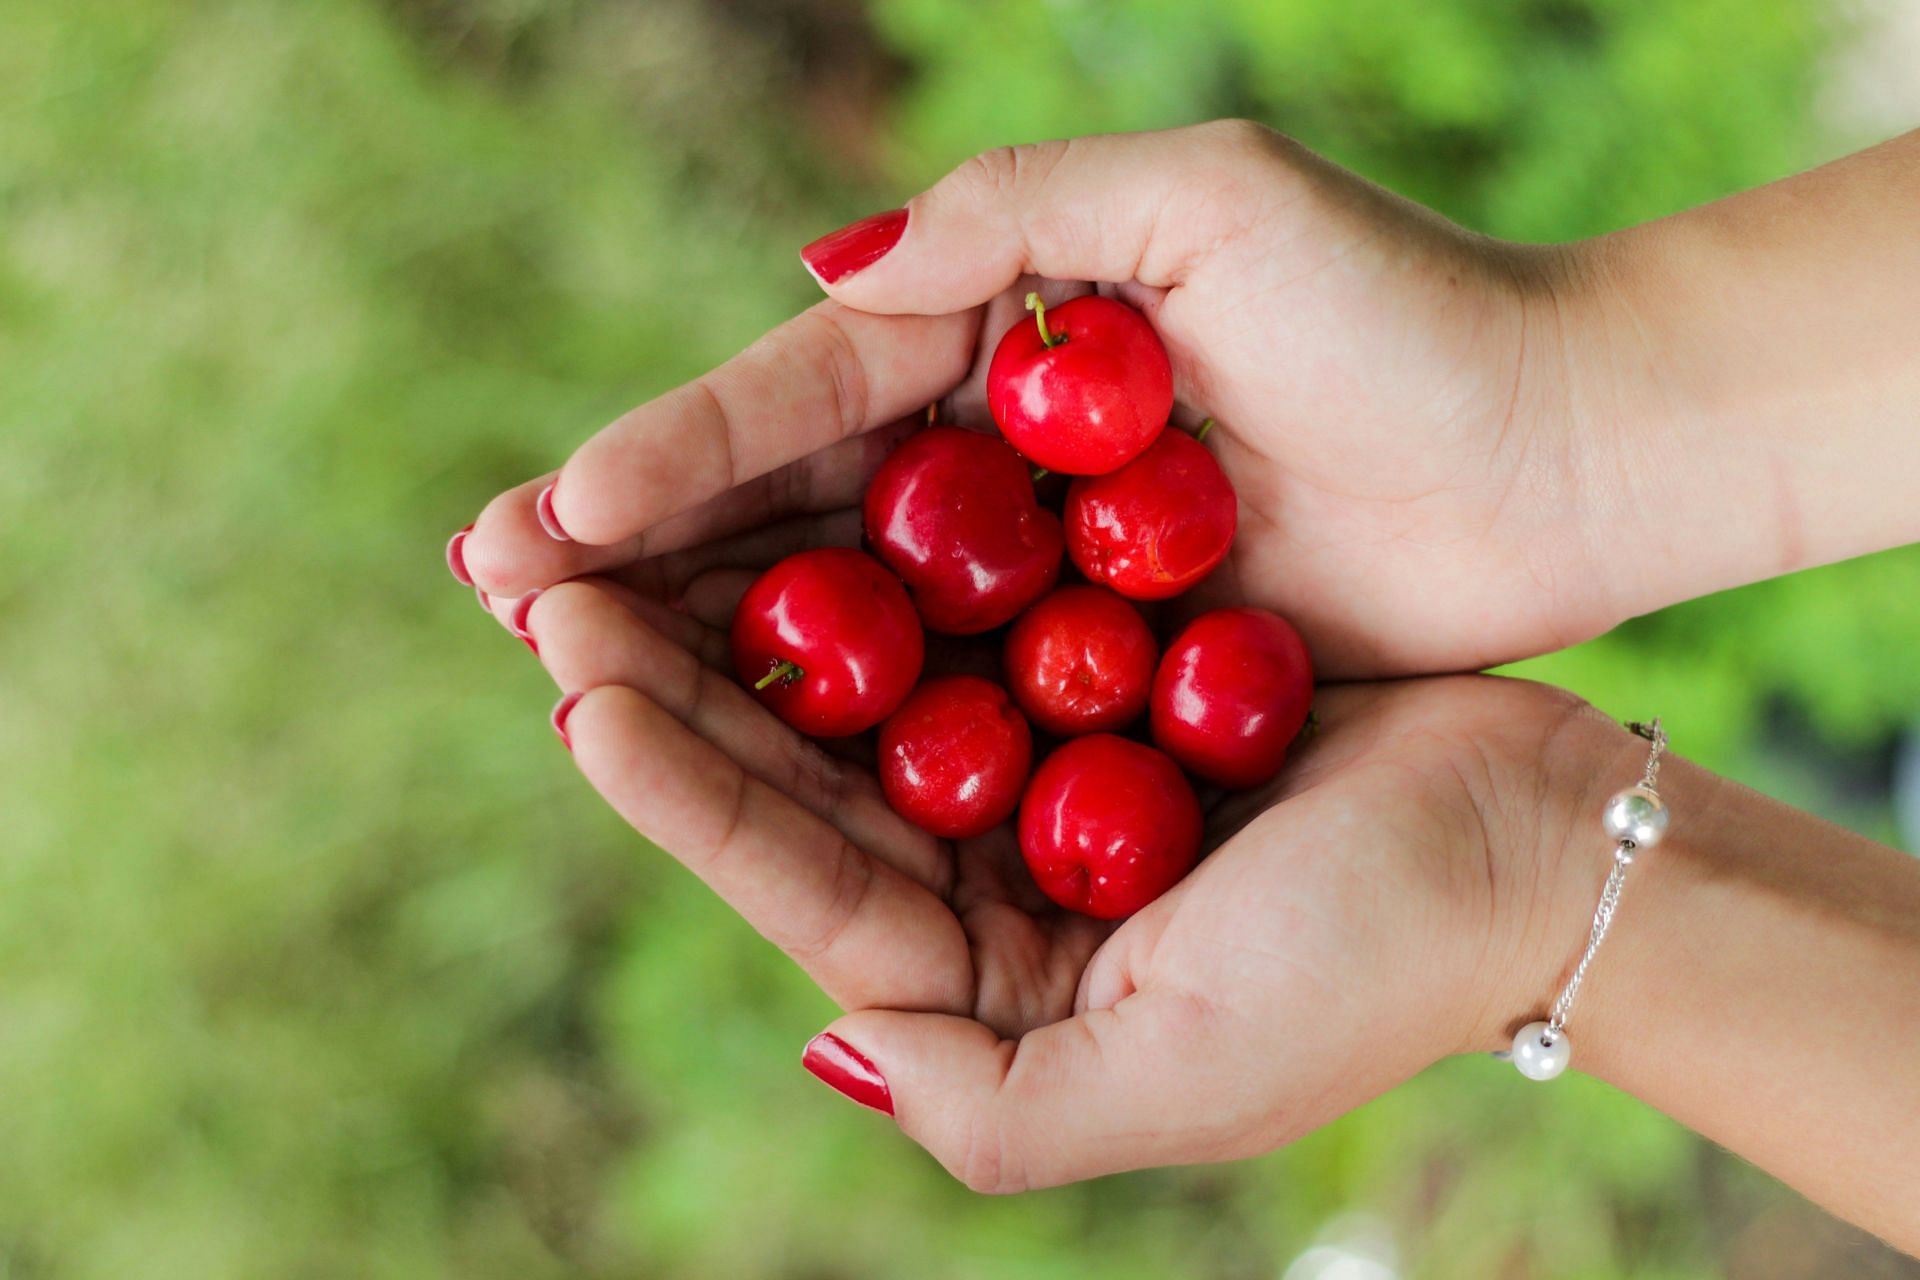 Acerola cherry benefits: Better Digestion (Image by Manu Camargo/Unsplash)